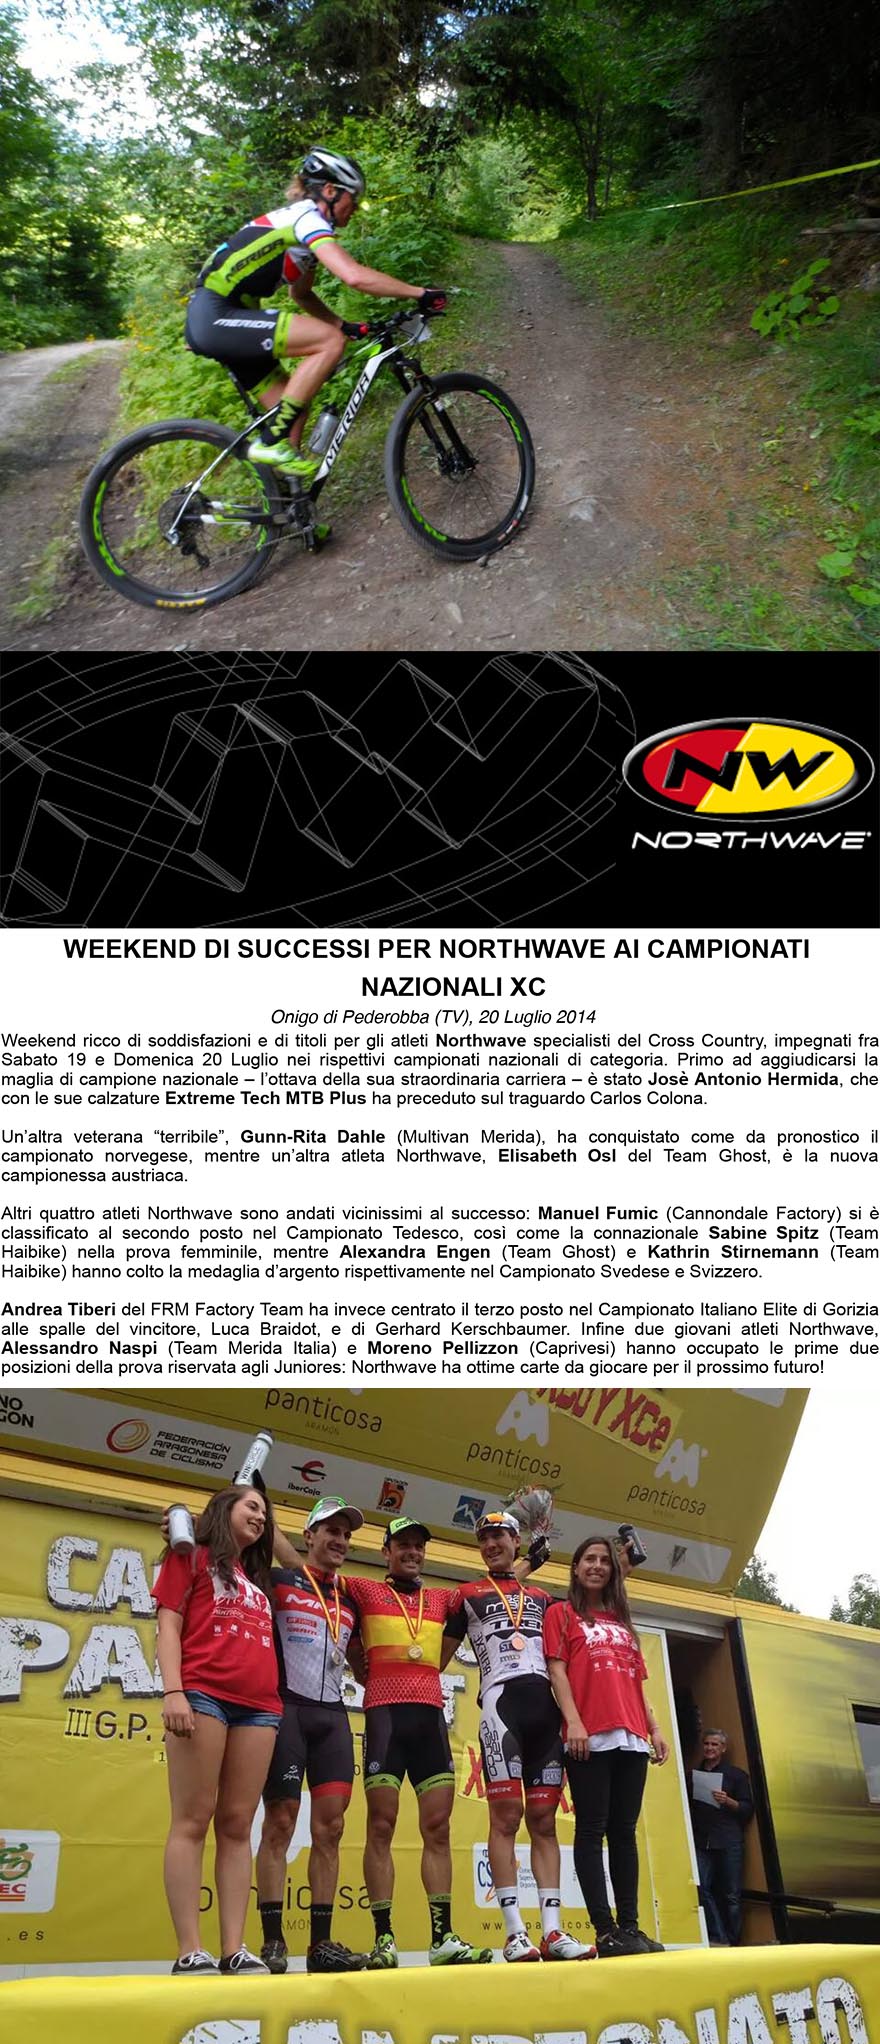 WEEKEND DI SUCCESSI PER NORTHWAVE AI CAMPIONATI NAZIONALI XC Comunicato Stampa 20 Luglio 2014